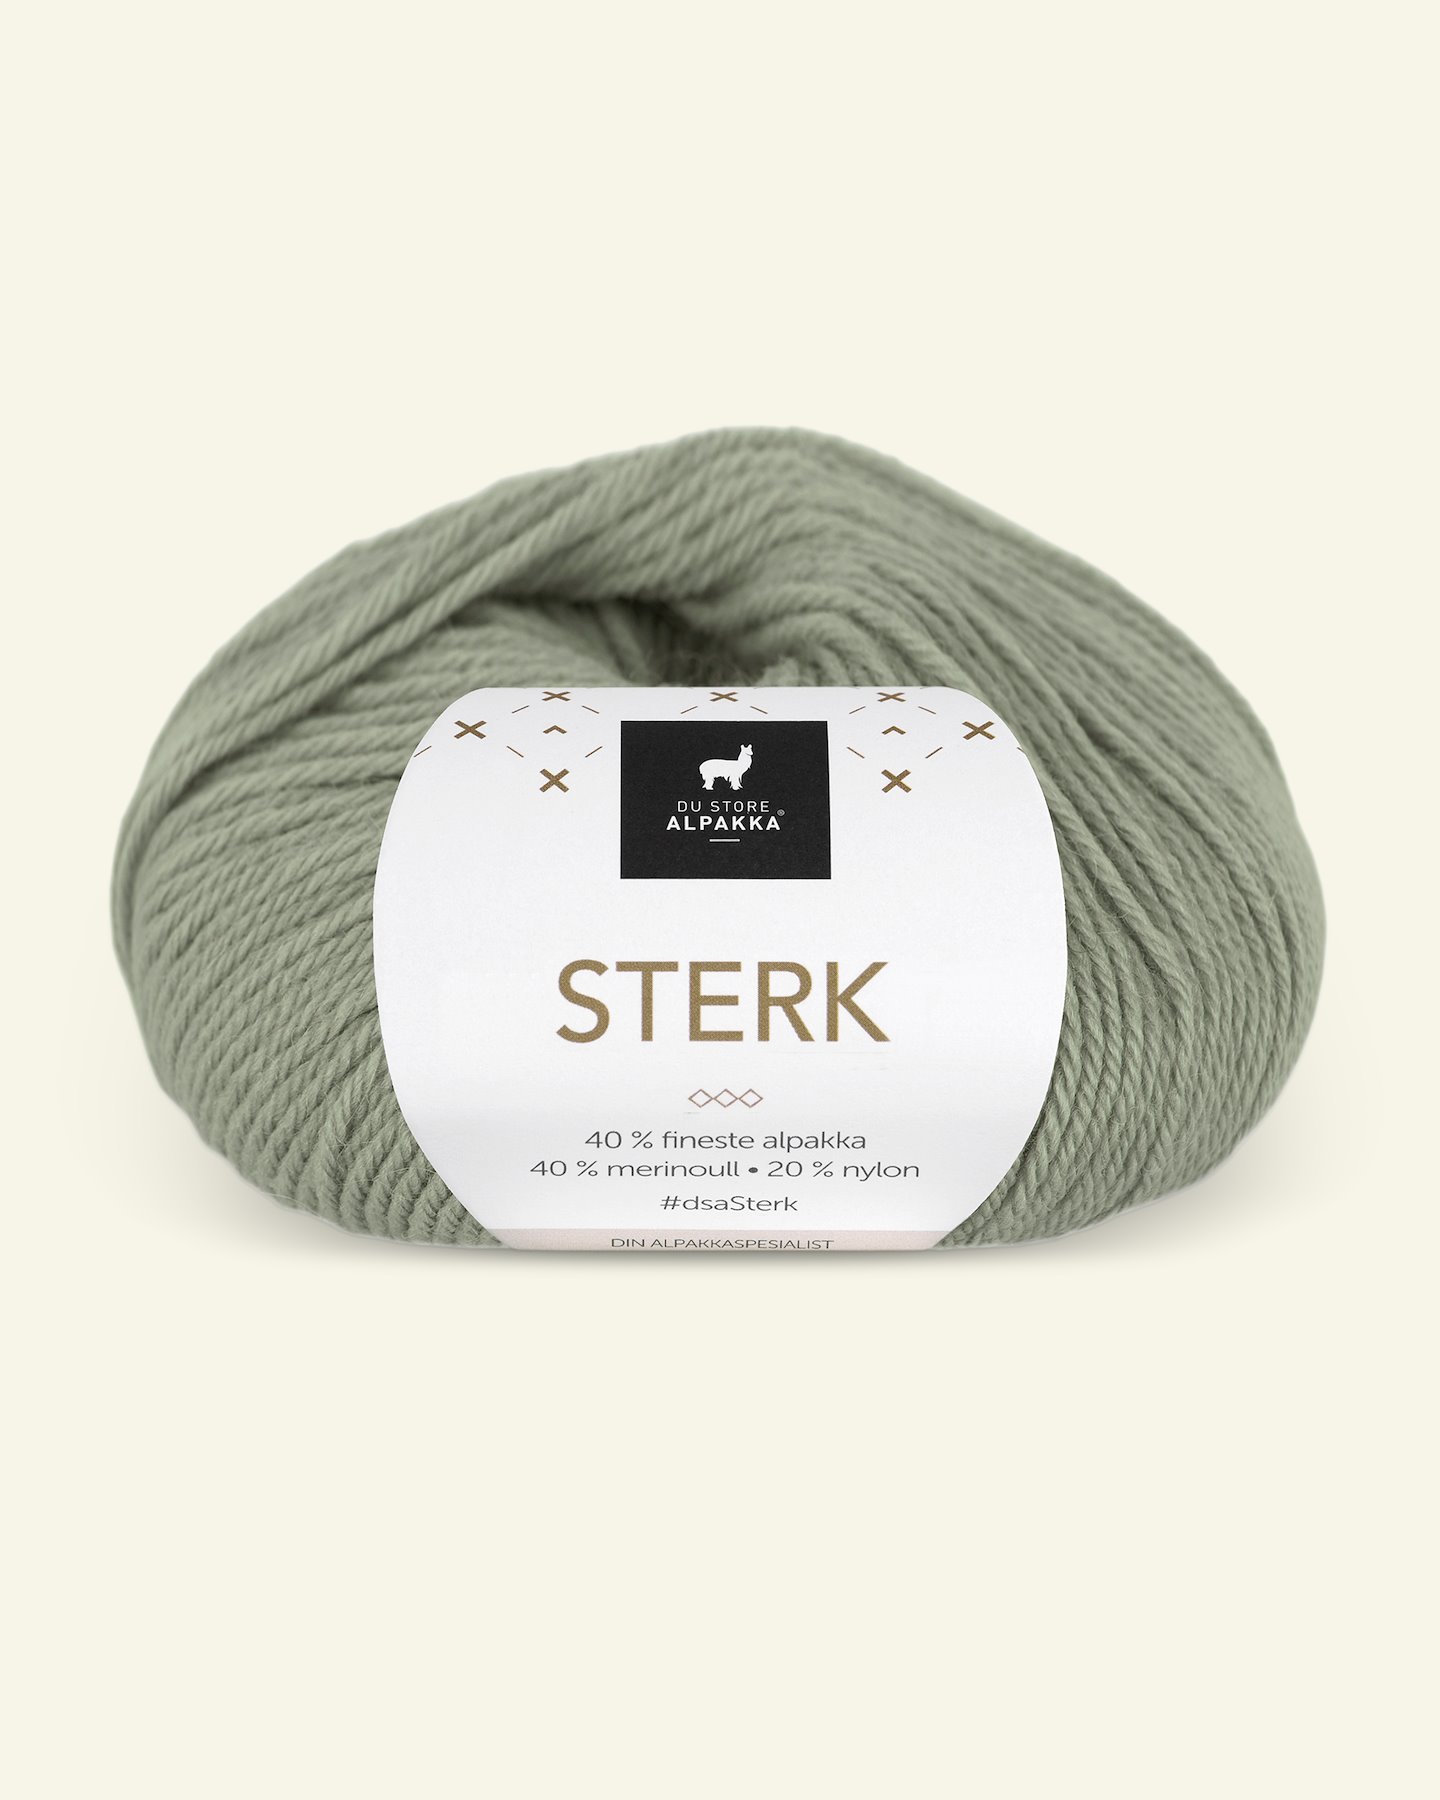 Du Store Alpakka, alpaca merino mixed yarn "Sterk", sage (916) 90000708_pack